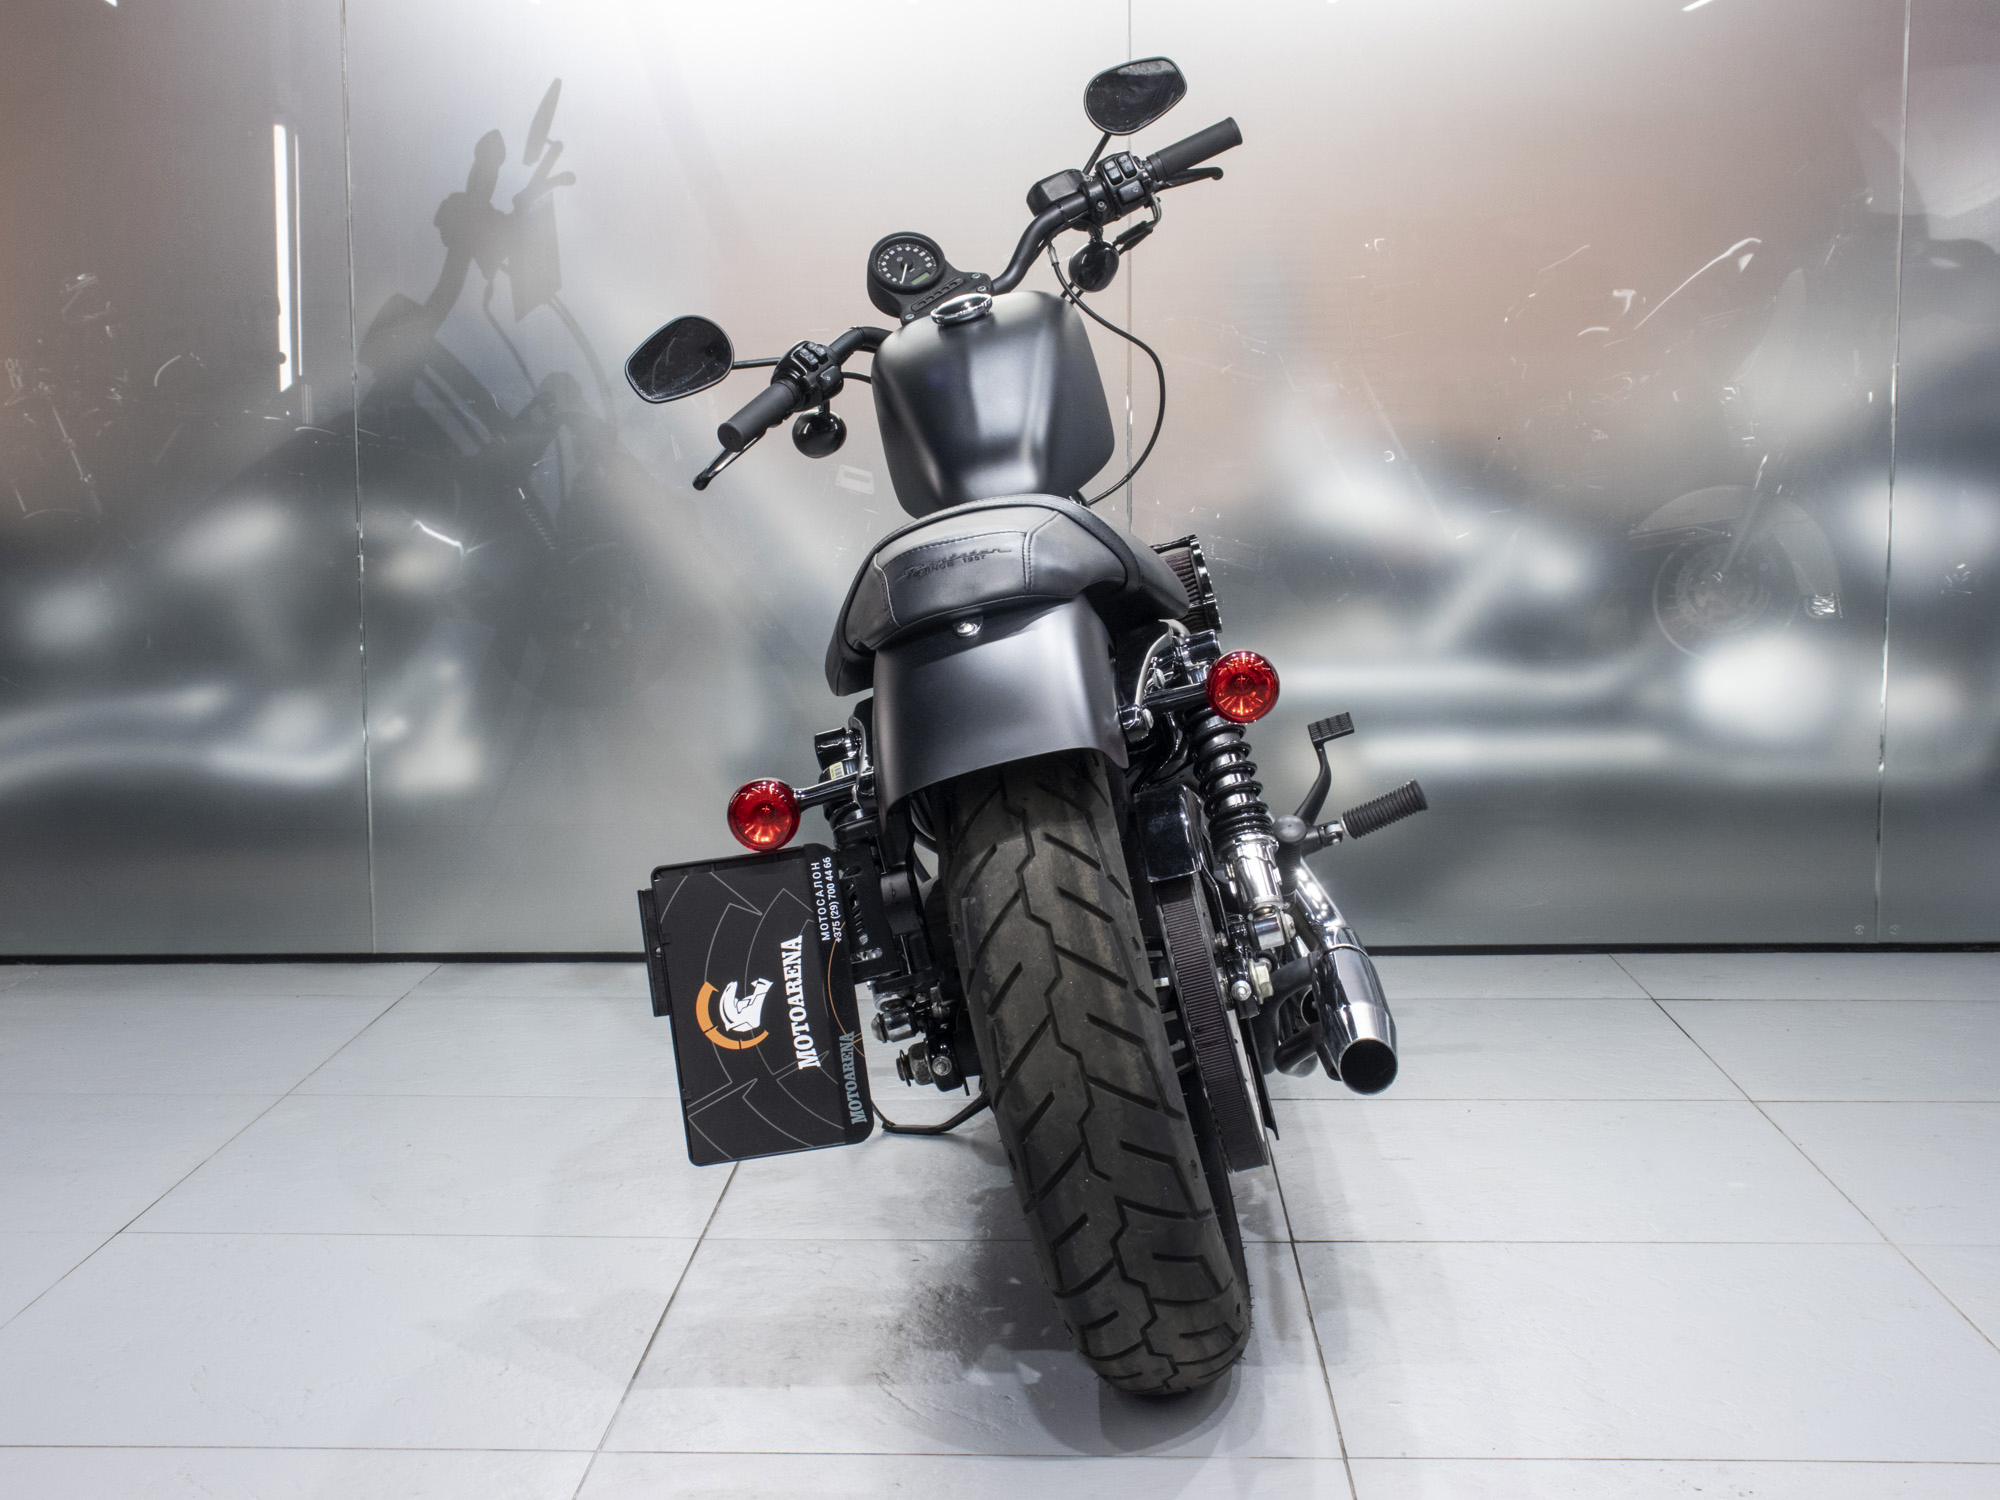 Harley-Davidson Sportster XL883 N #8568